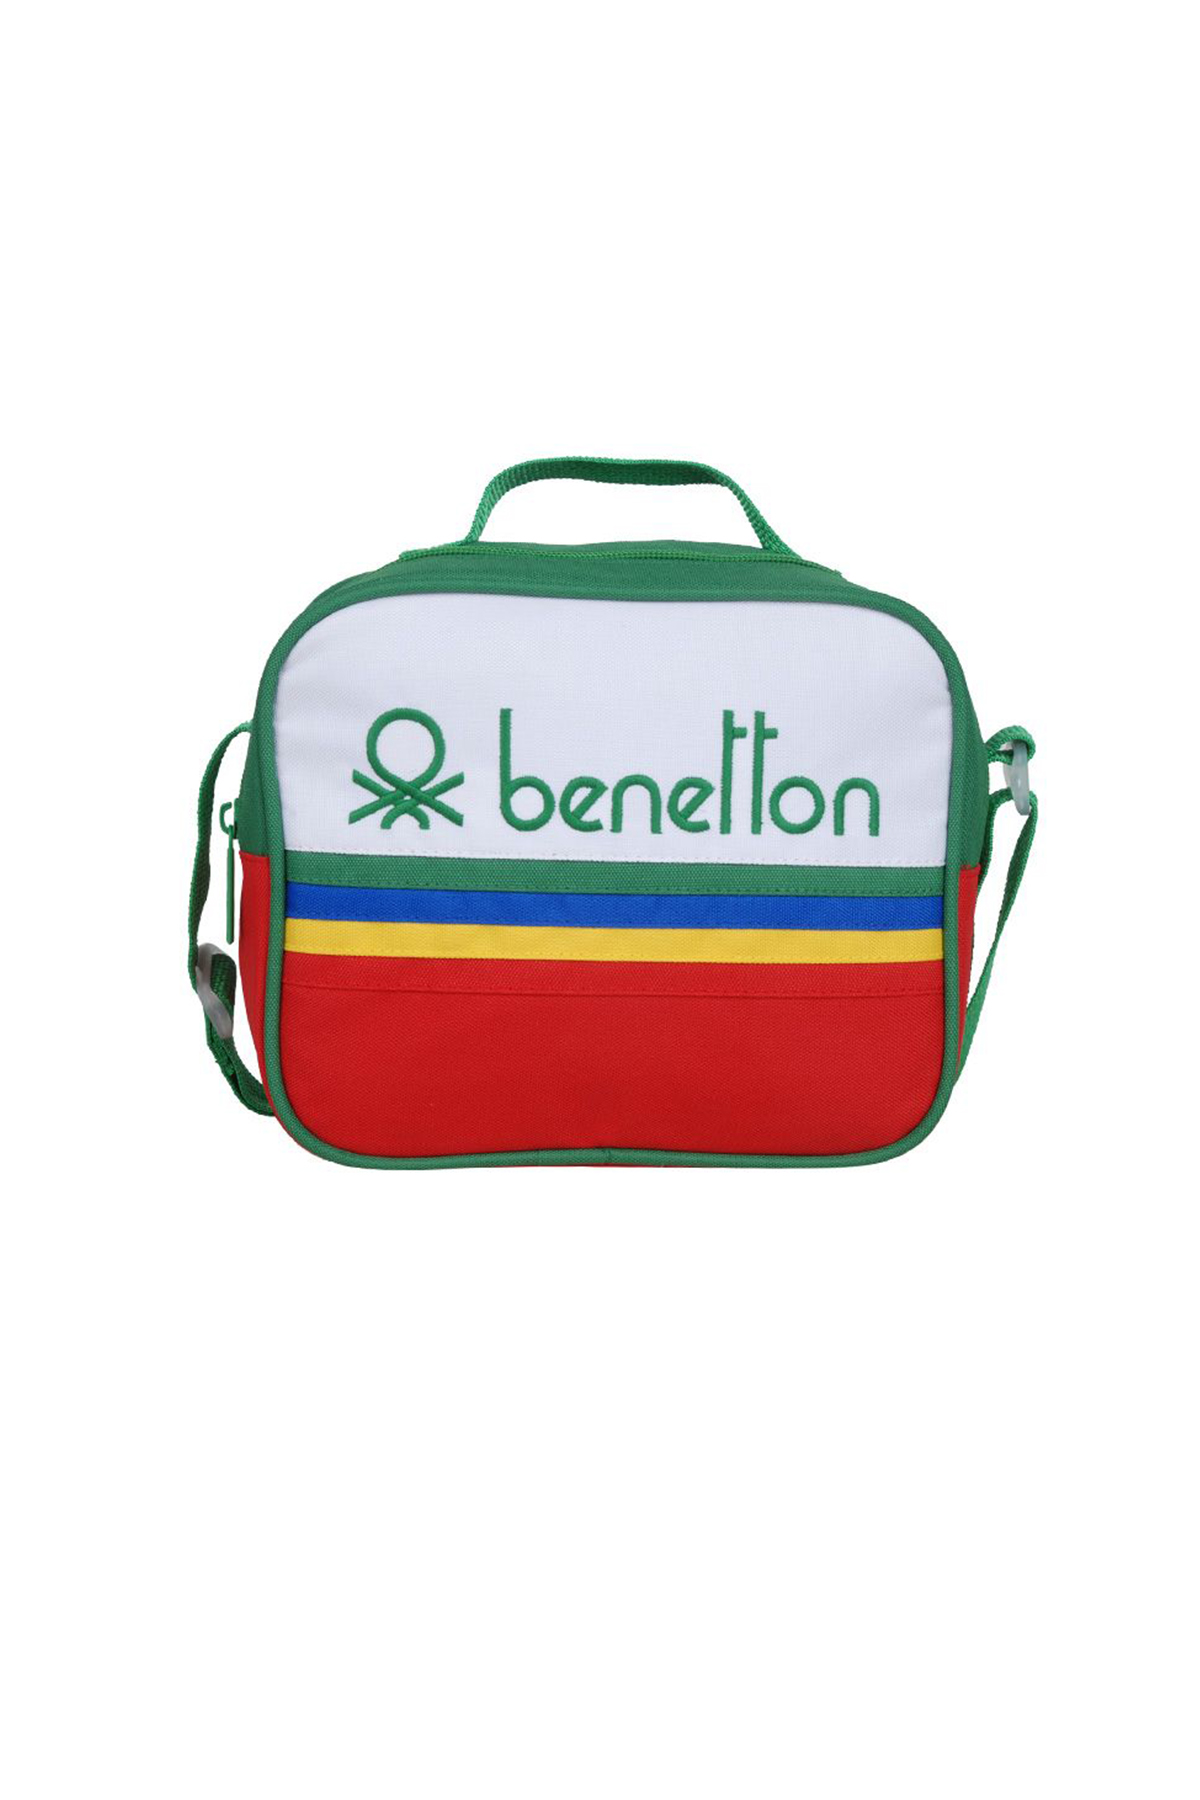 United Colors of Benetton Beslenme Çantası 70036